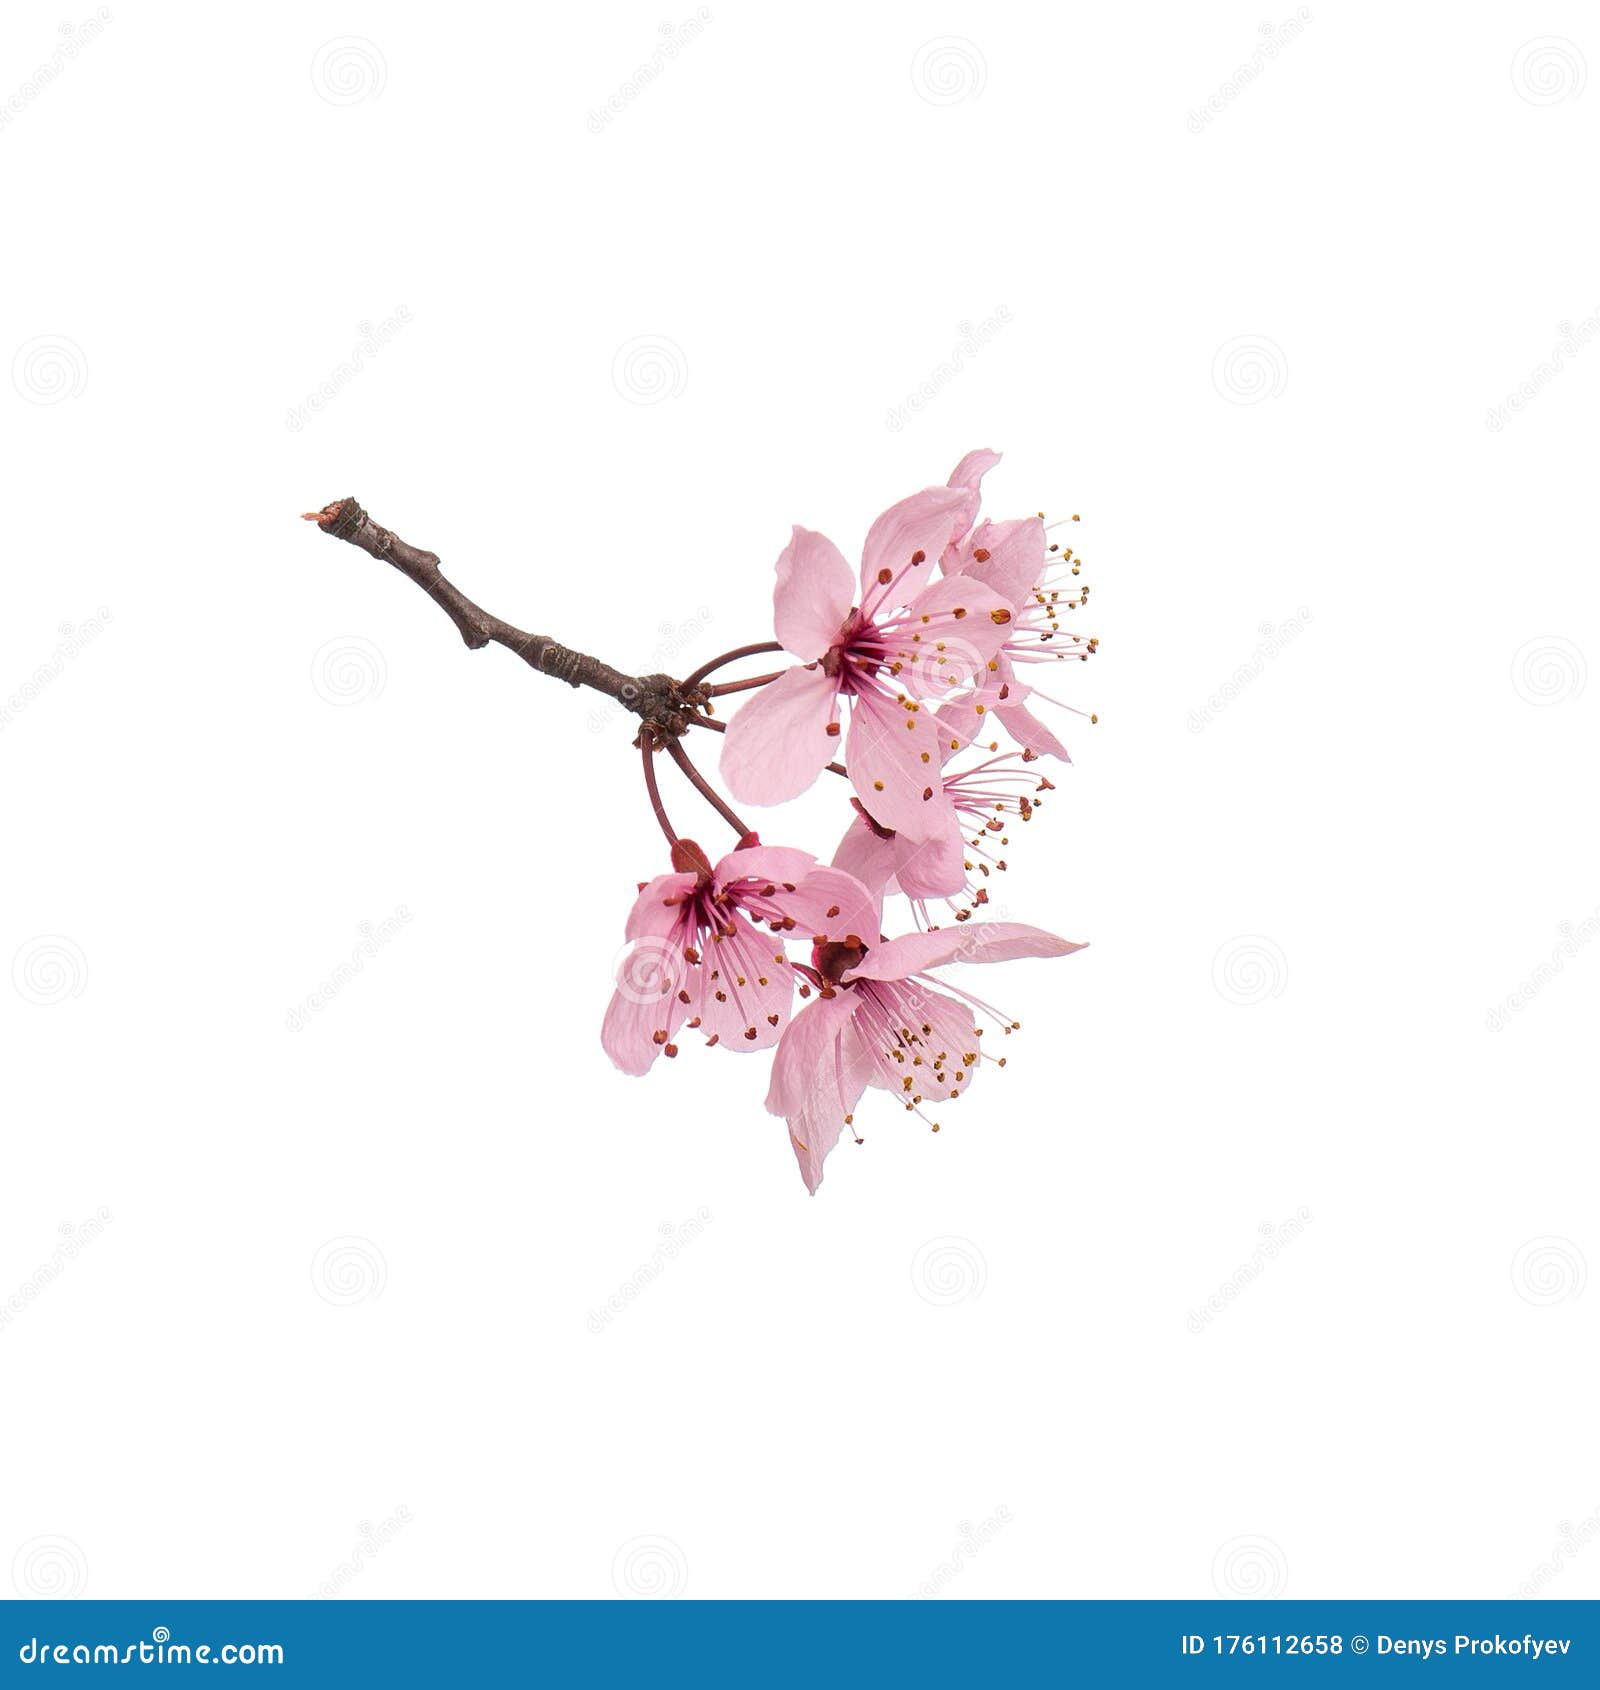 real cherry blossom tree branch